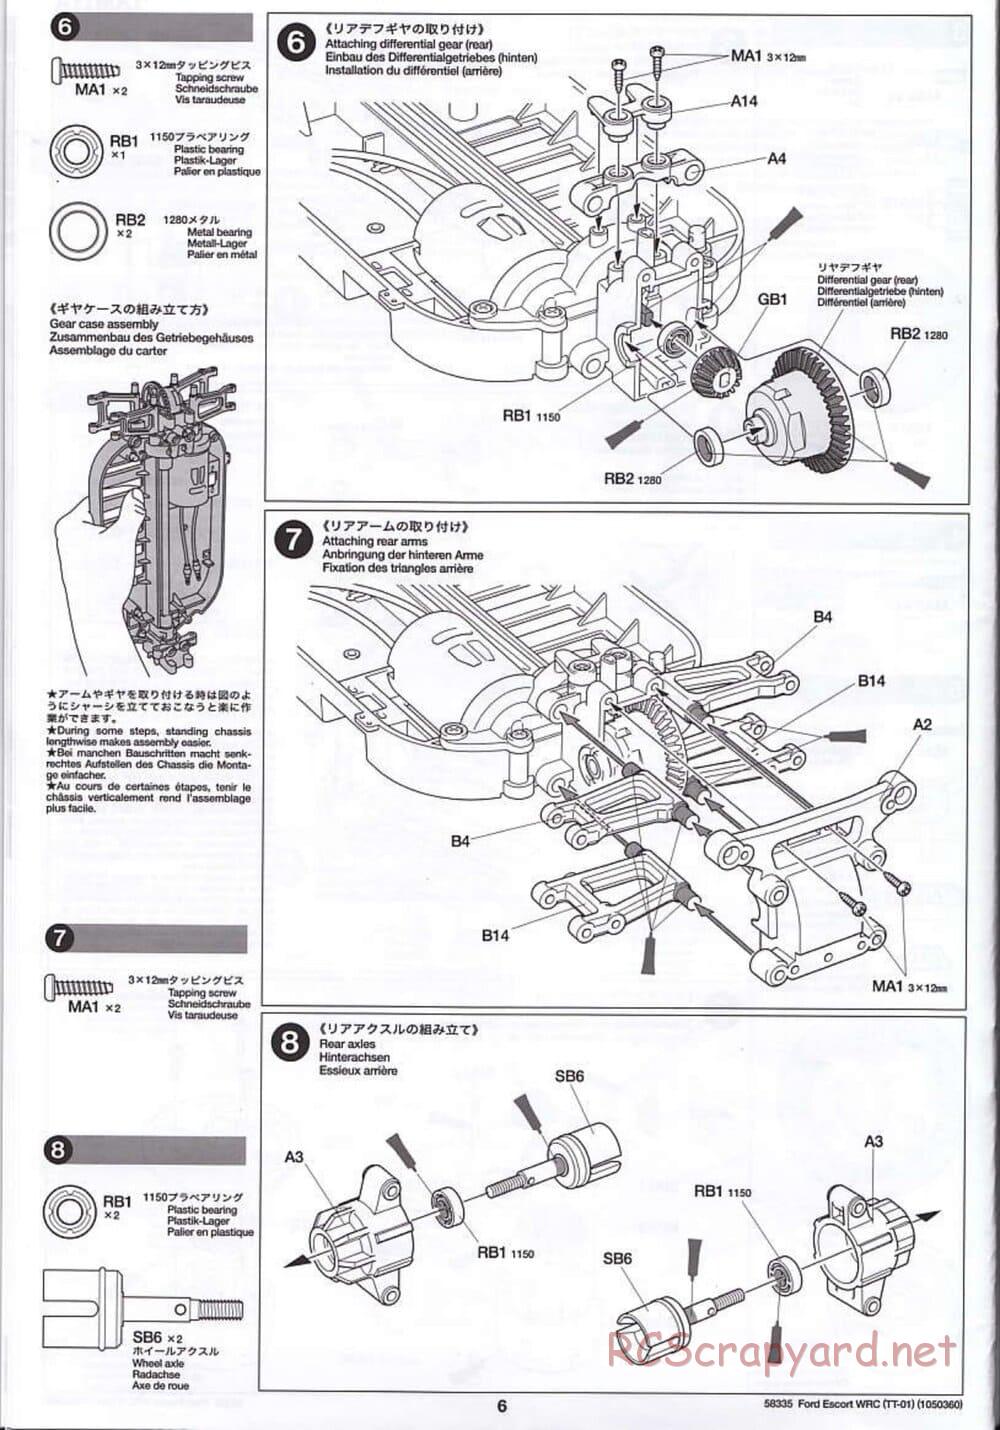 Tamiya - Ford Escort WRC - TT-01 Chassis - Manual - Page 6